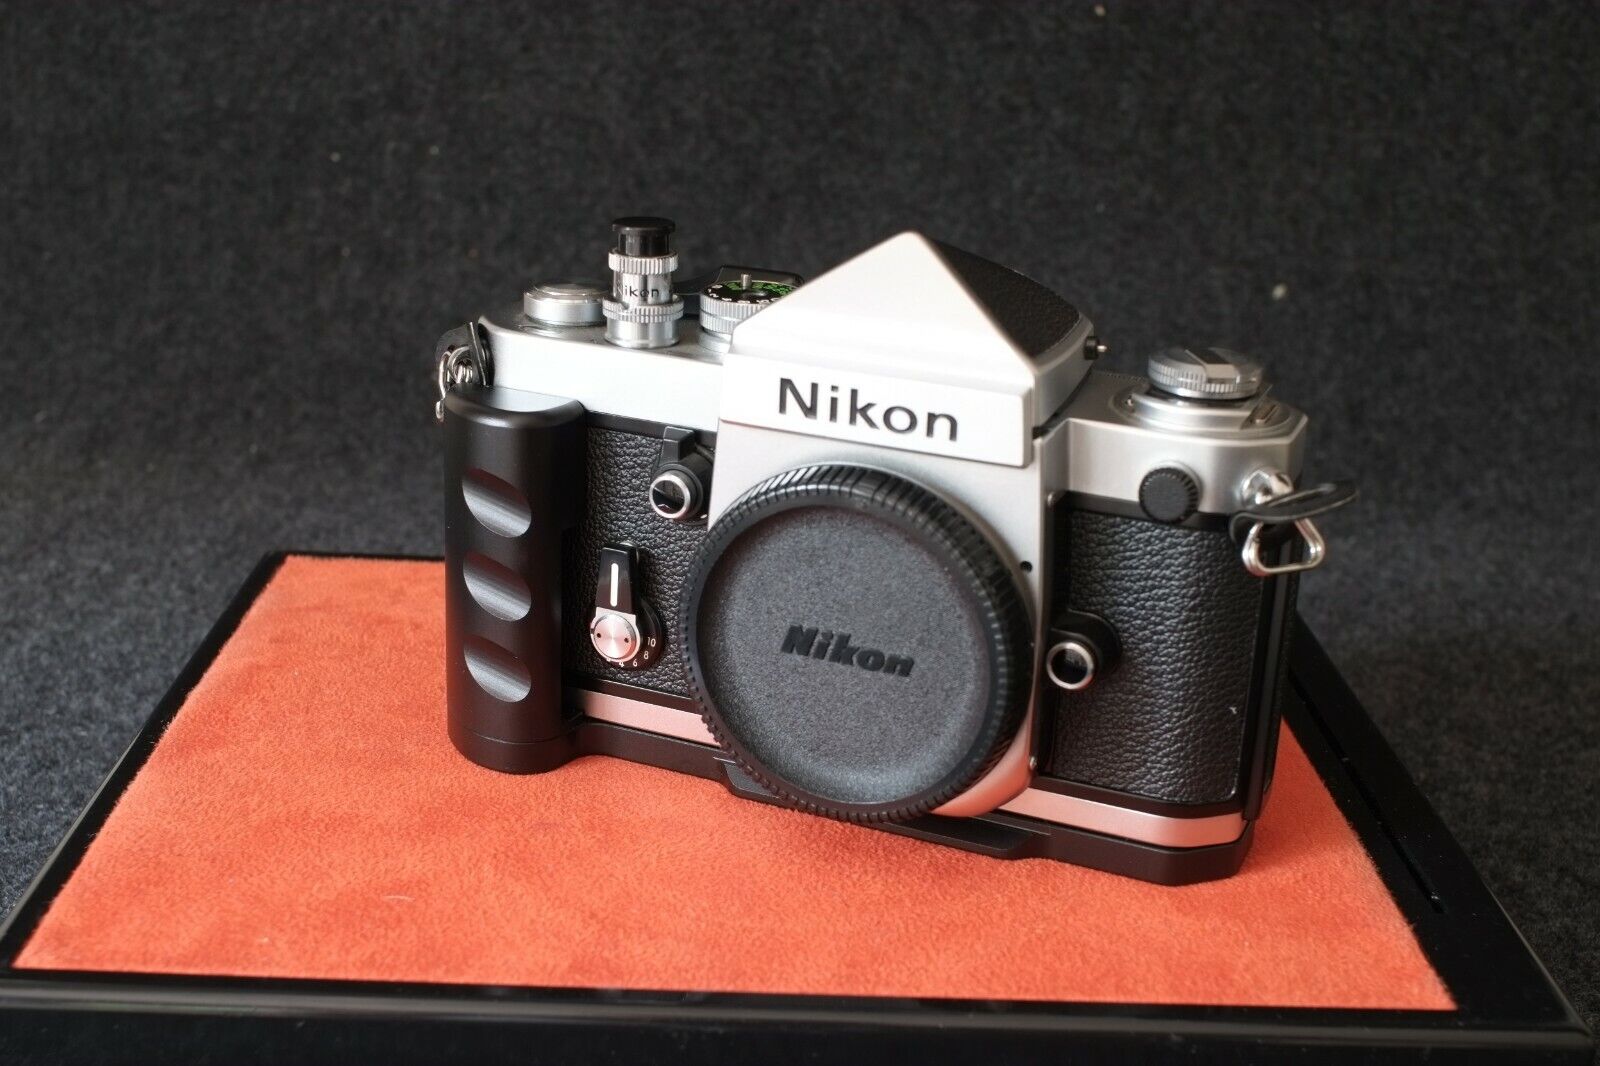 Nikon f2 Prism Max 73% OFF Omaha Mall Silver de-1